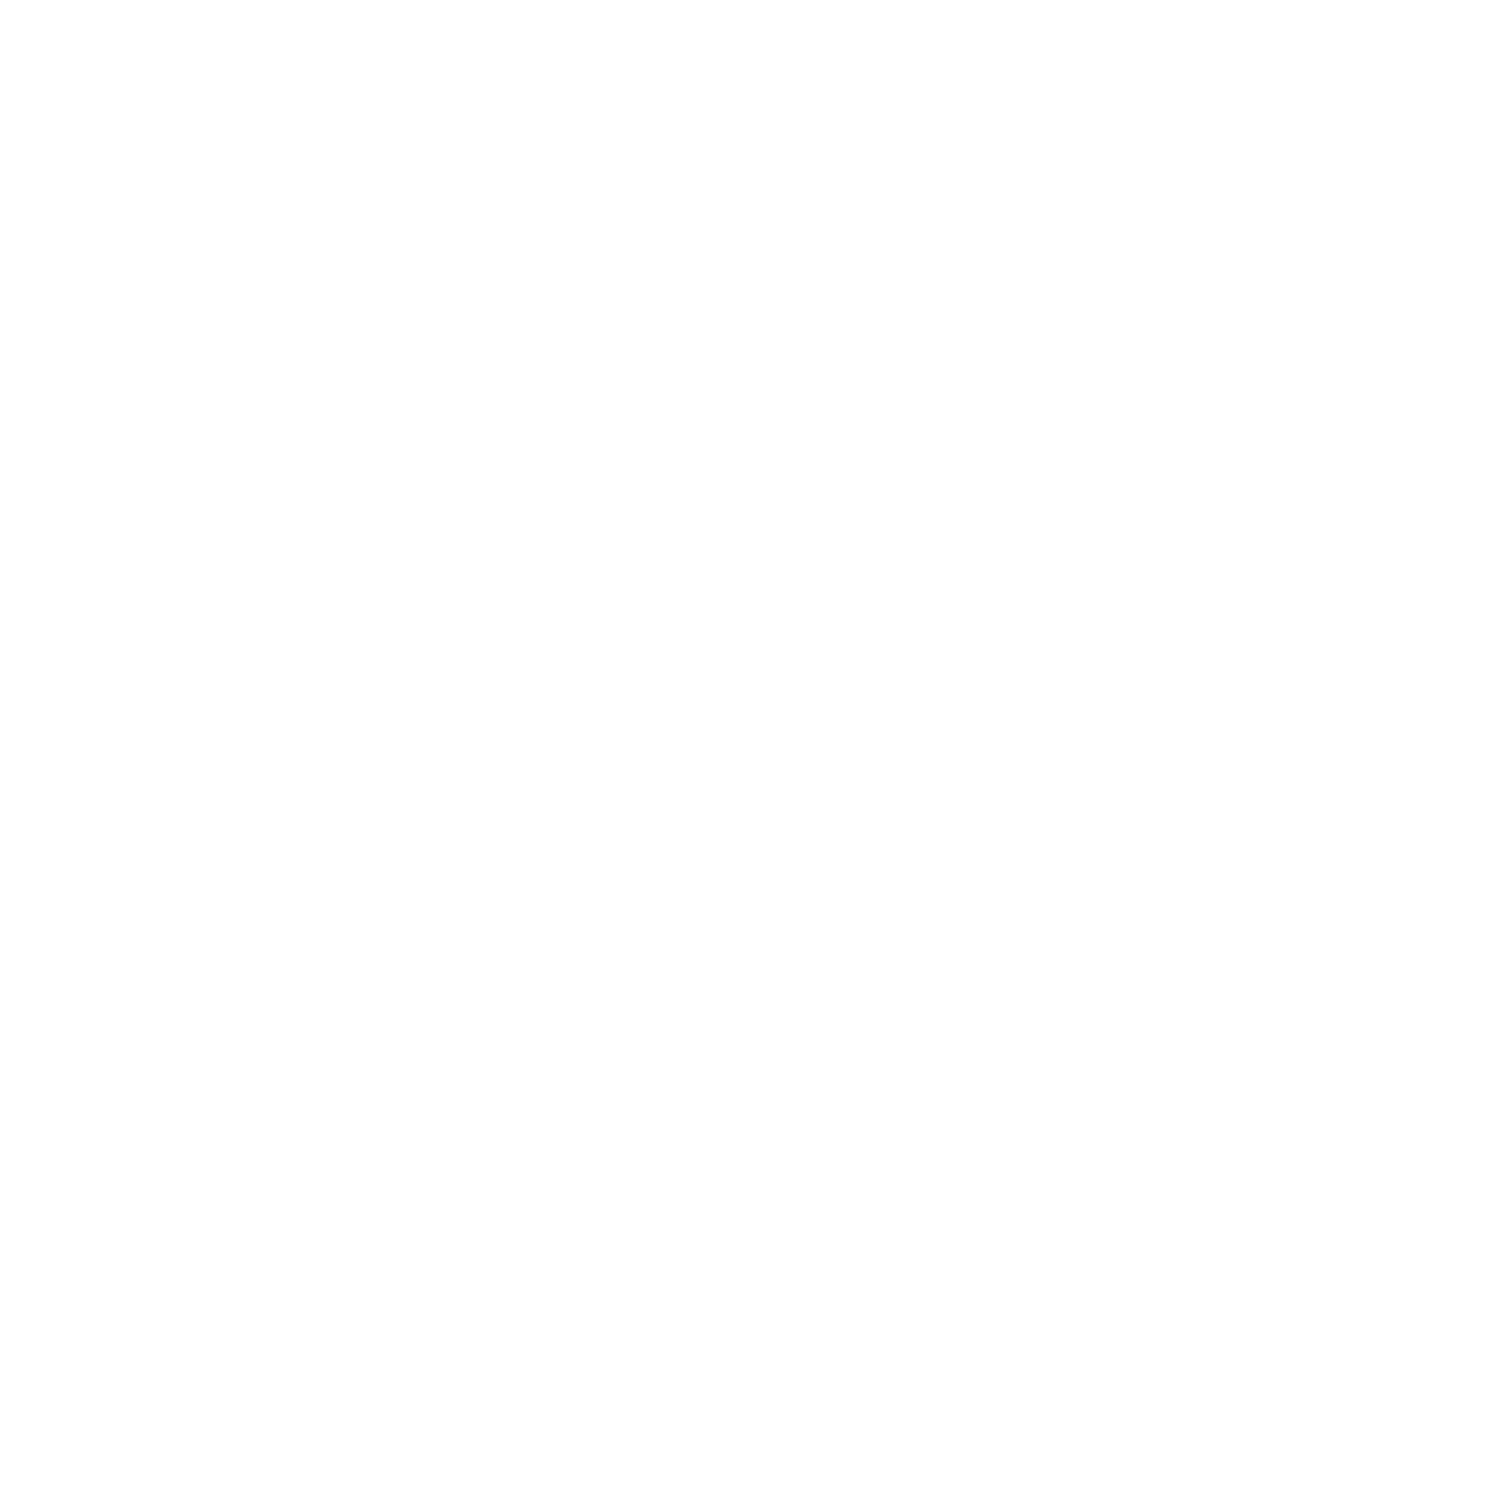 Willie McLaurin